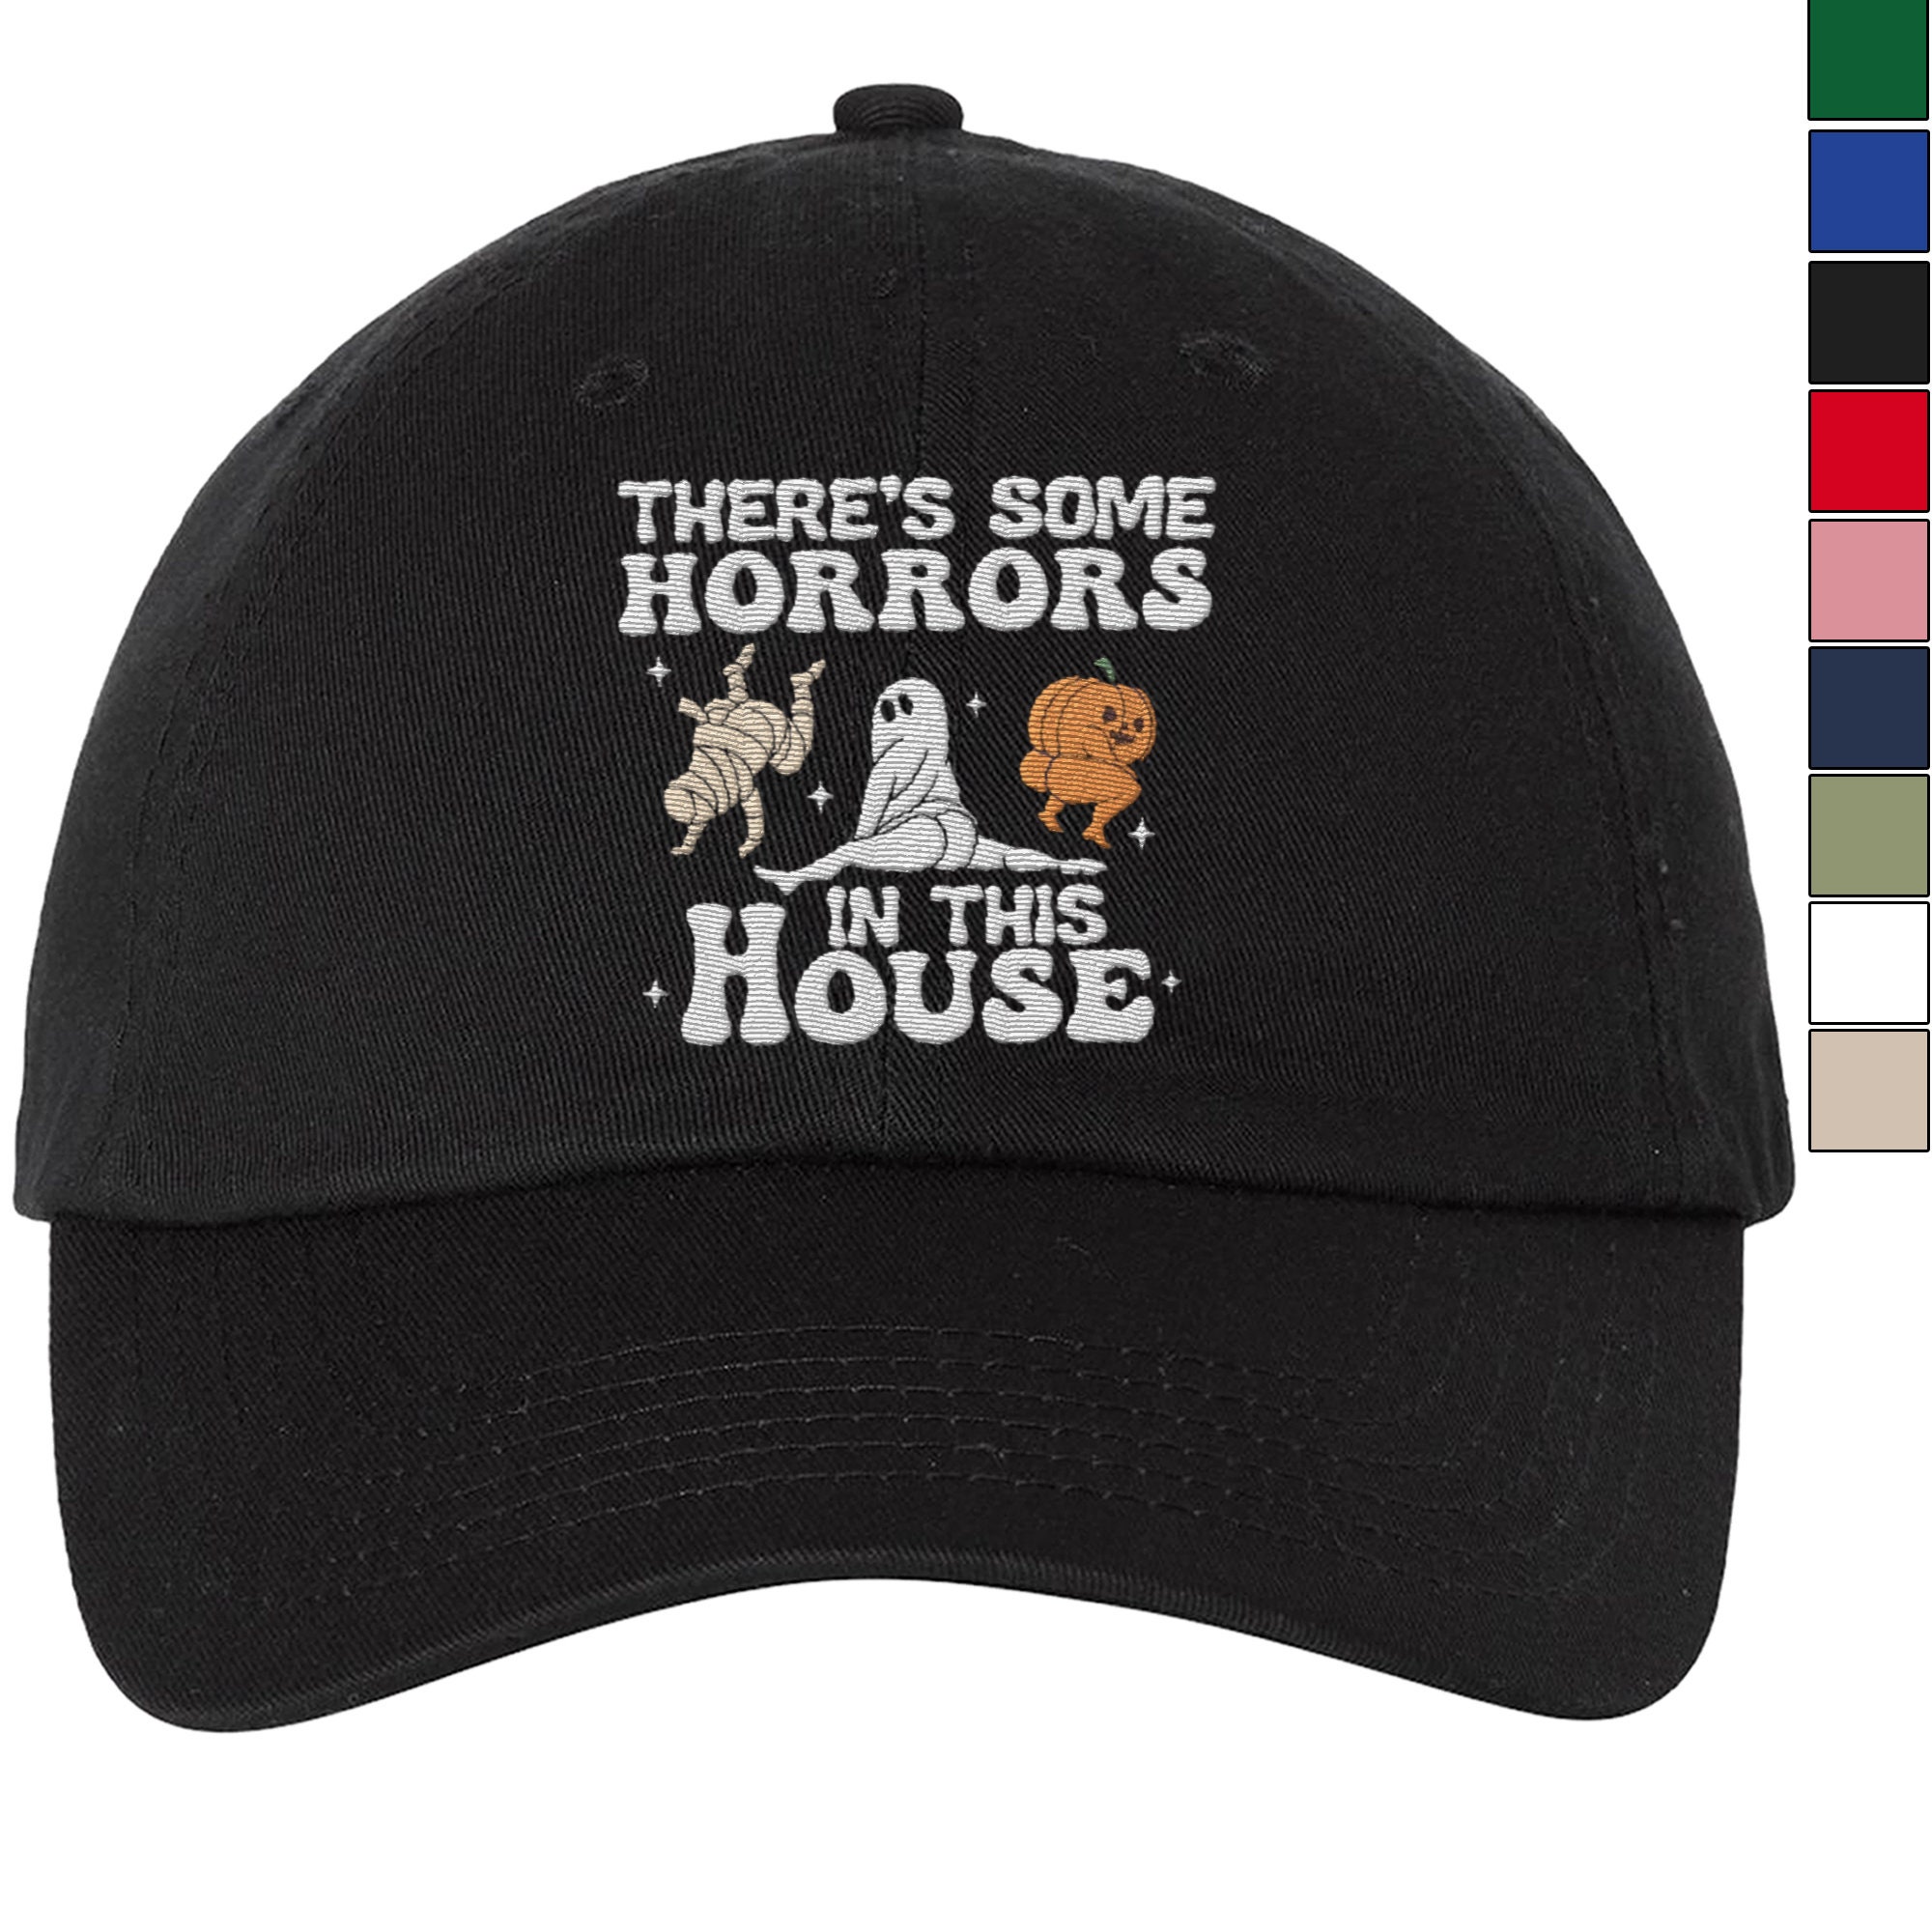 Trucker Hats with Friends of Devil's Lake Logo